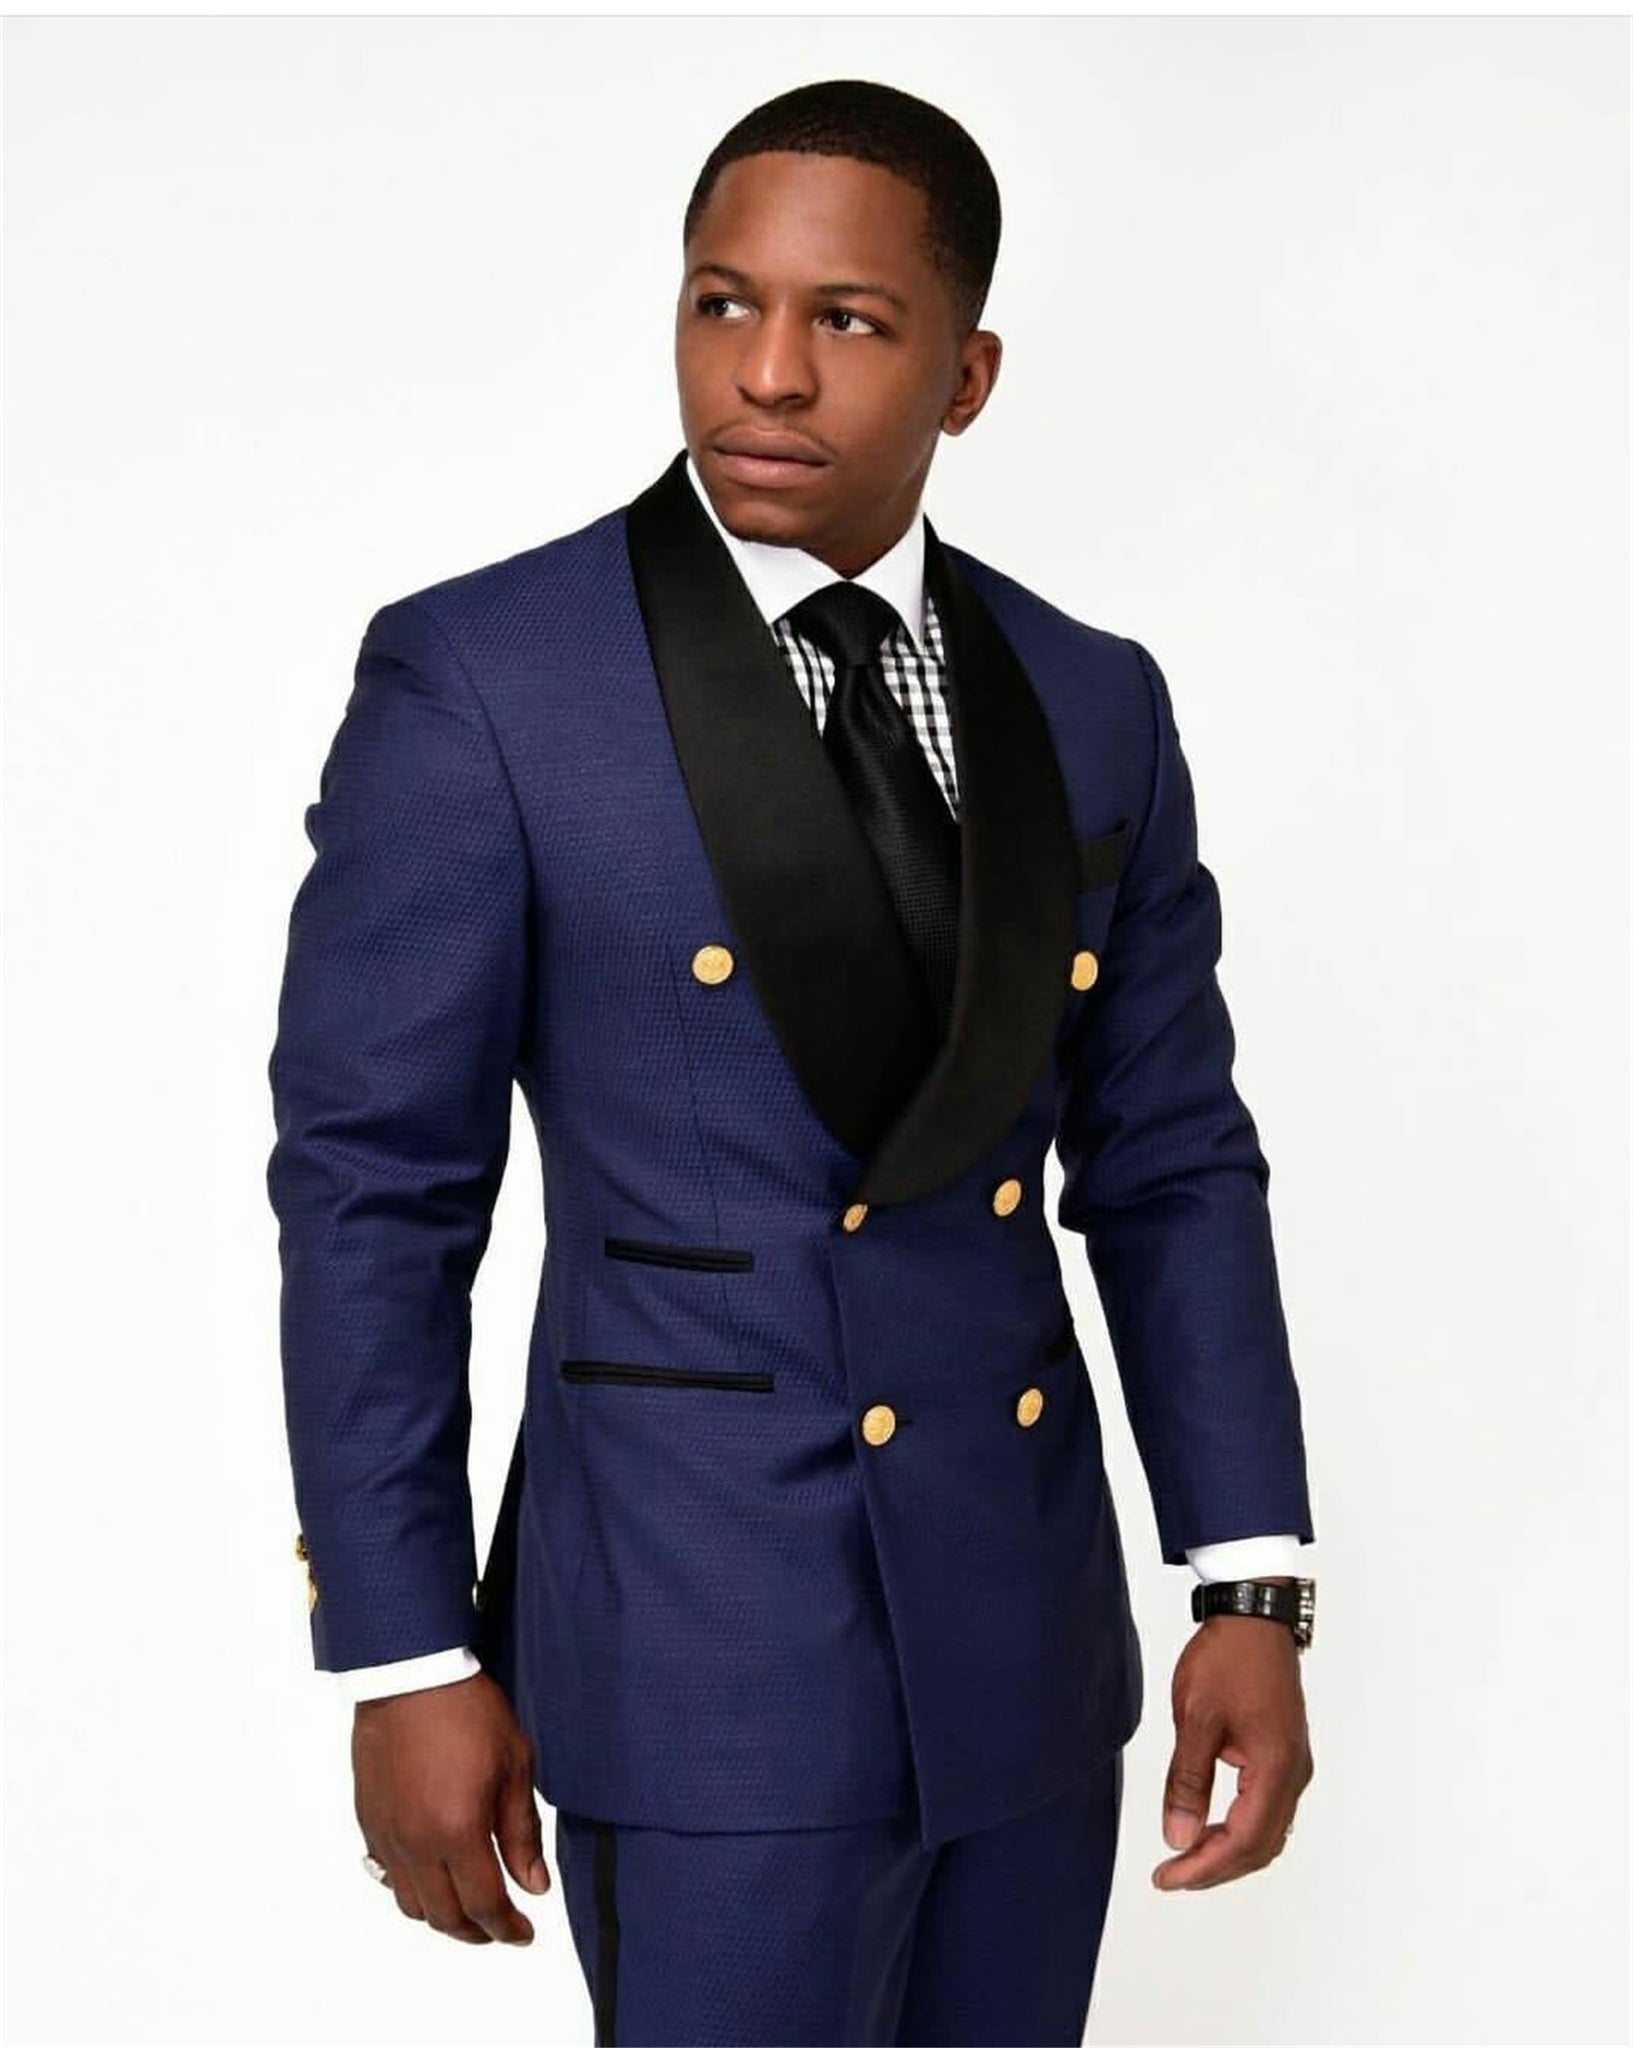 Coat Pant Designs Navy Blue Wedding Suits Men Shawl Lapel Double Breasted Party Suit Costume Homme